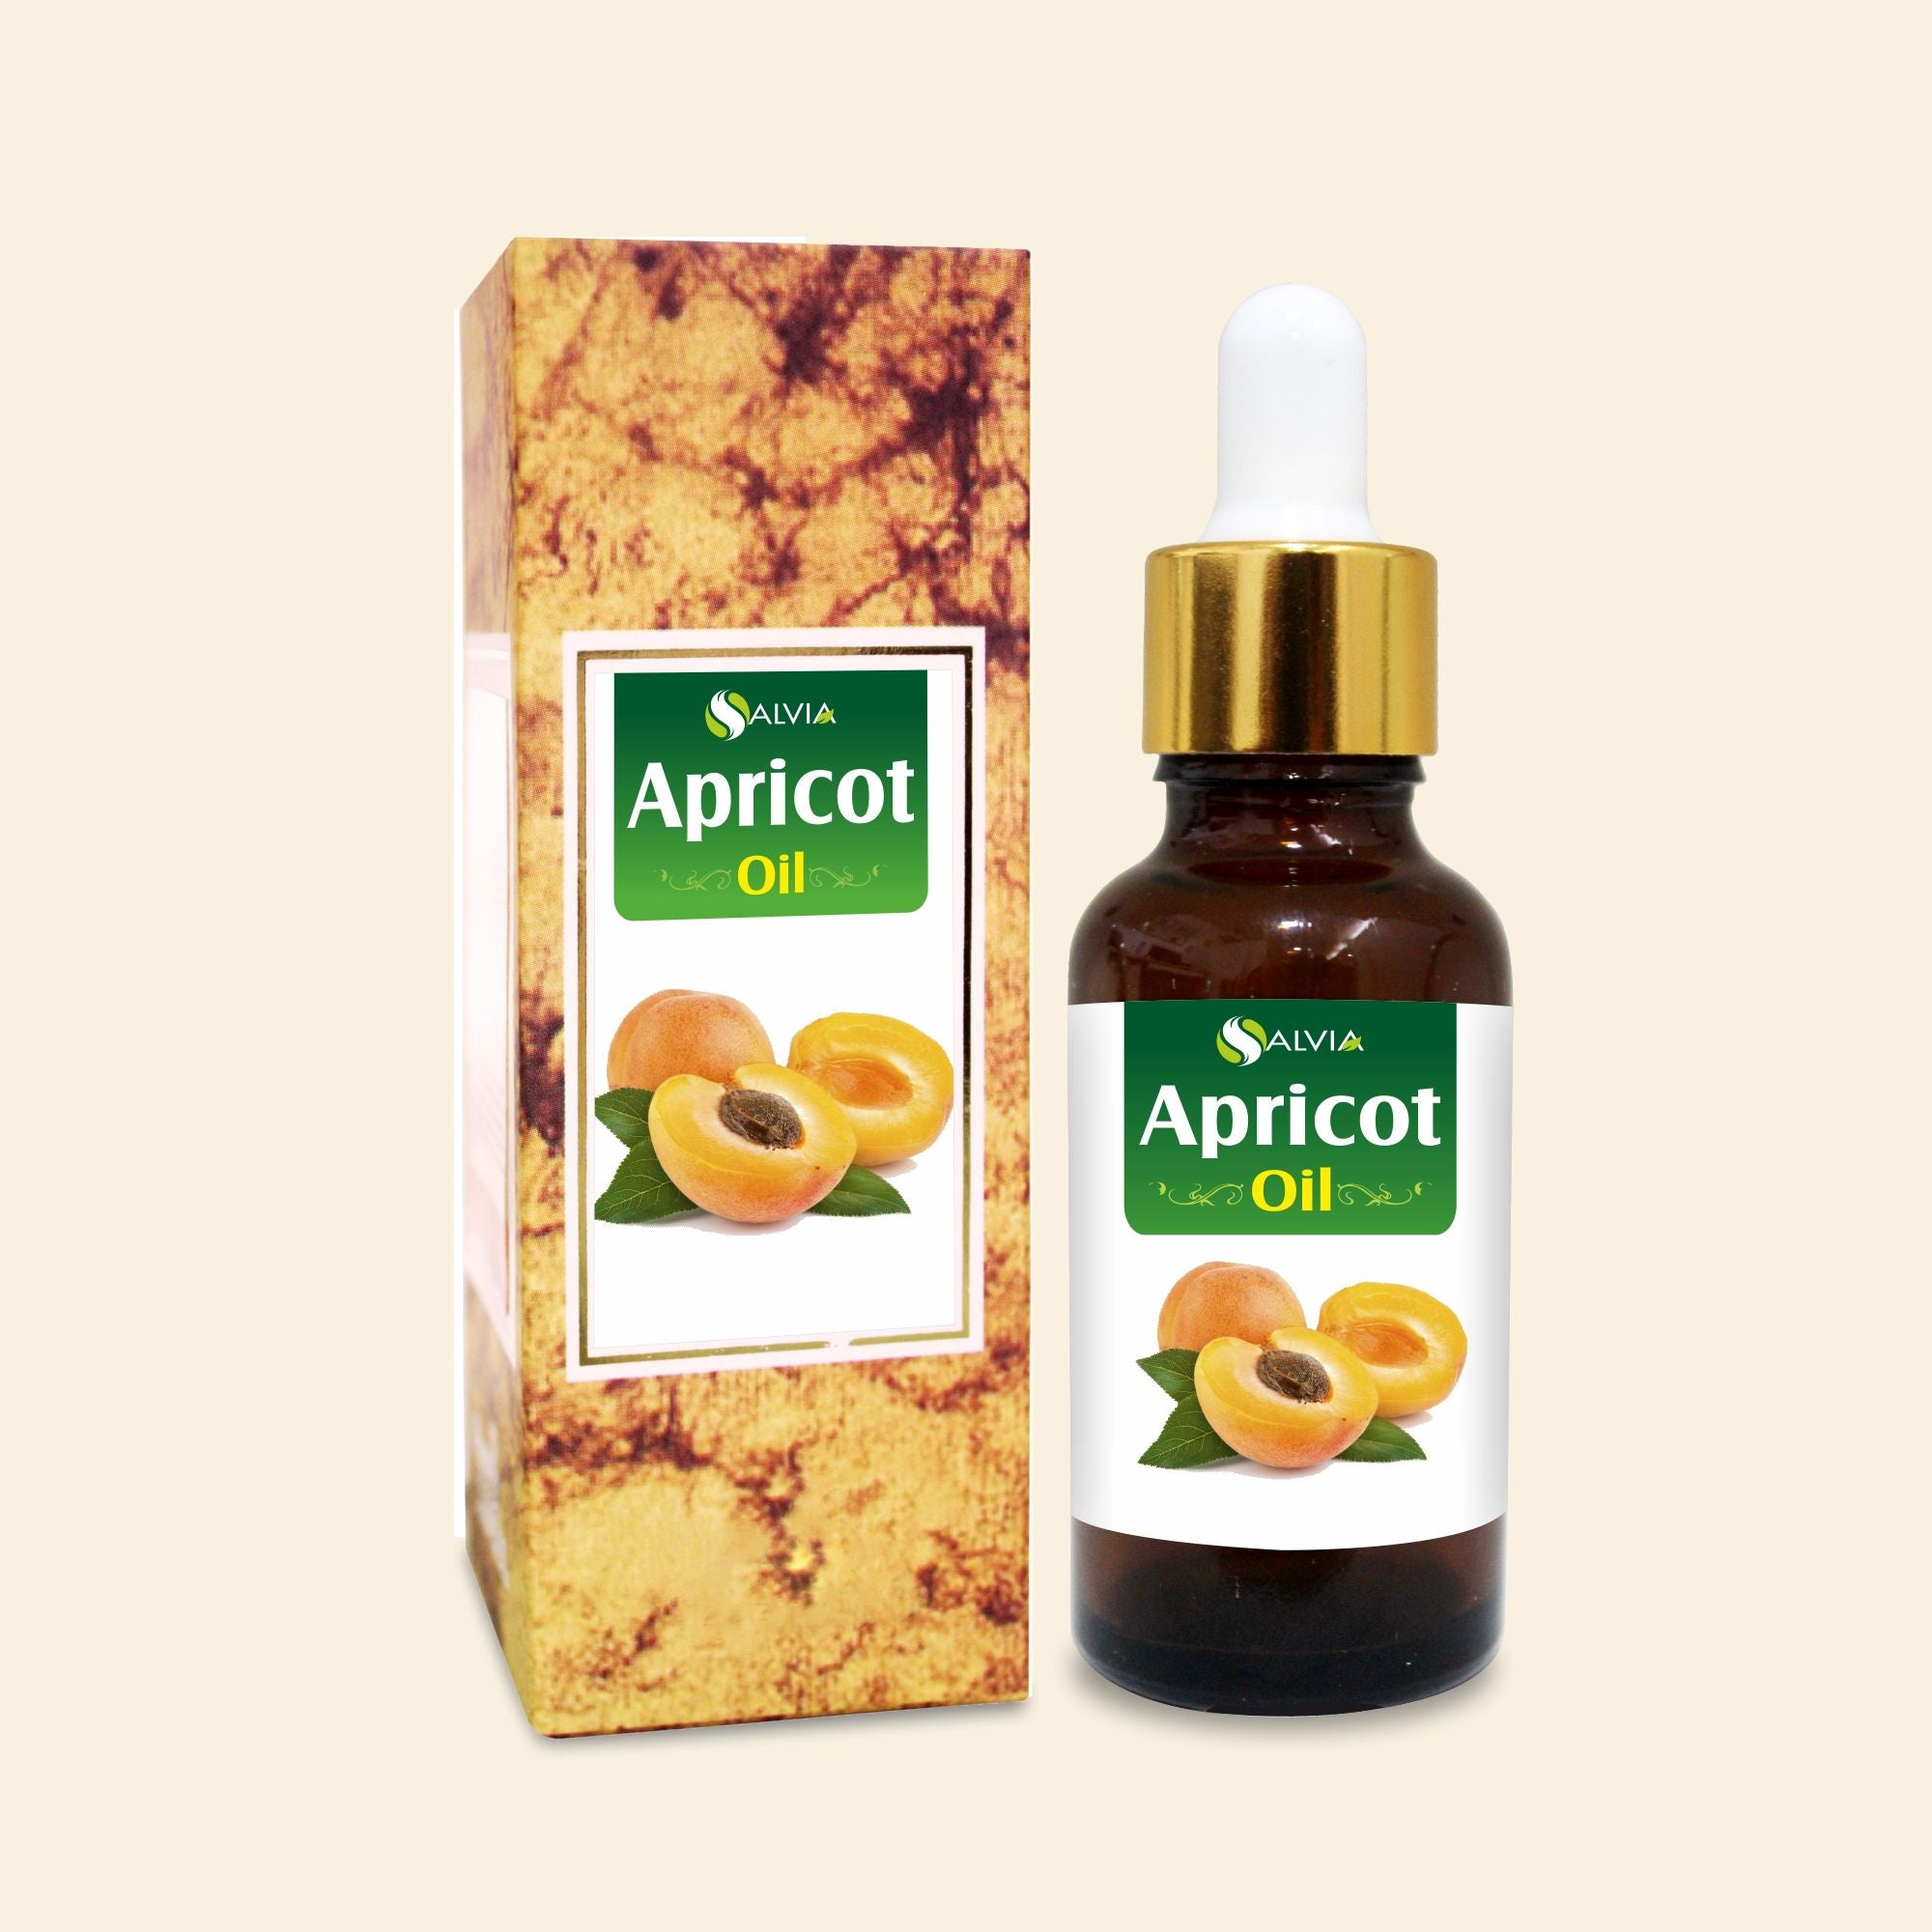 Salvia Natural Carrier Oils Apricot Oil (Prunus armeniaca) 100% Natural Pure Carrier Oil